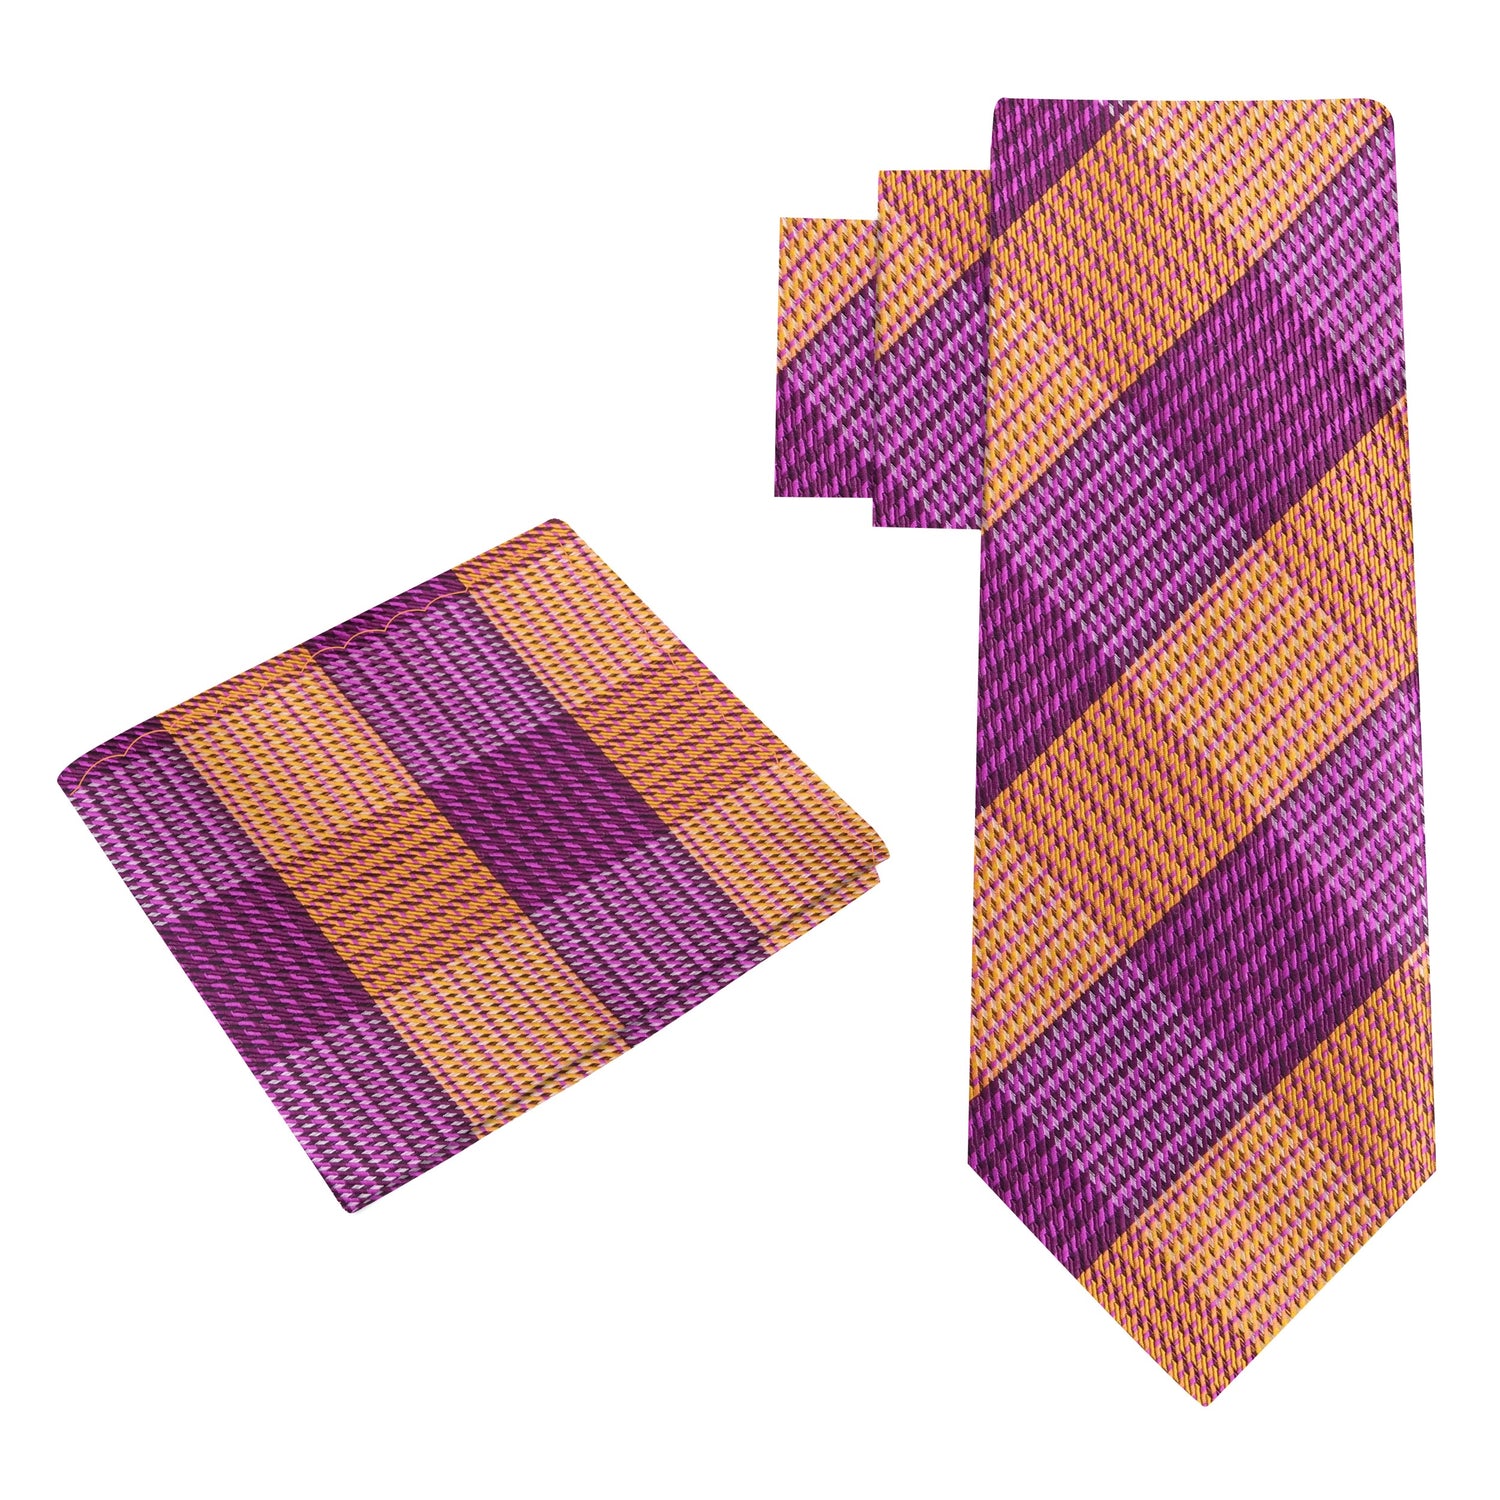 Alt view: Purple and Orange Plaid Necktie and Pocket Square